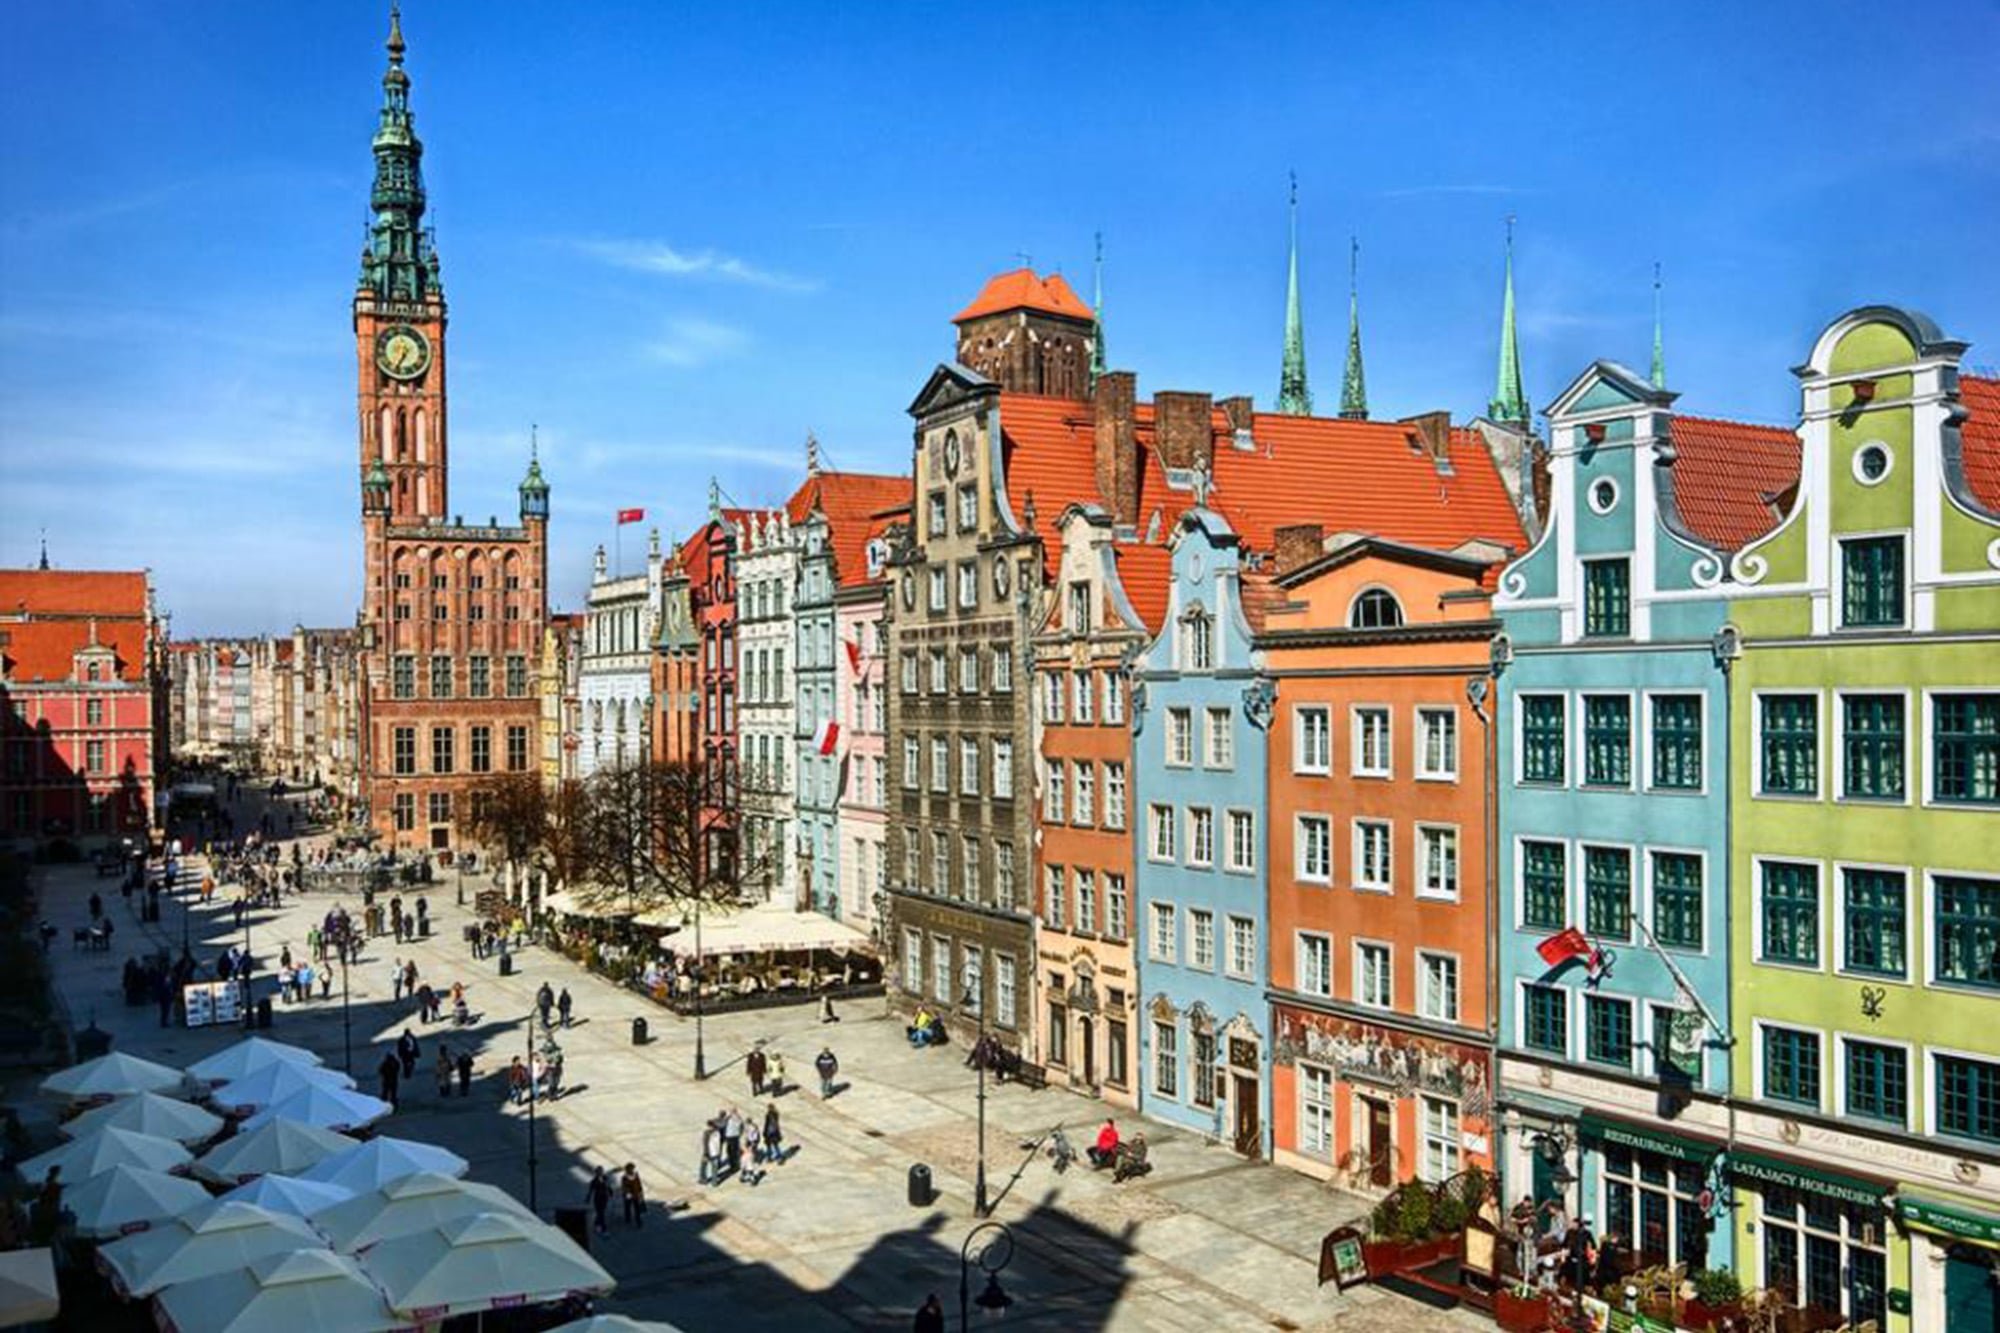 Swiss ouvrira Gdansk et Heringsdorf en été prochain - TRAVEL INSIDE F